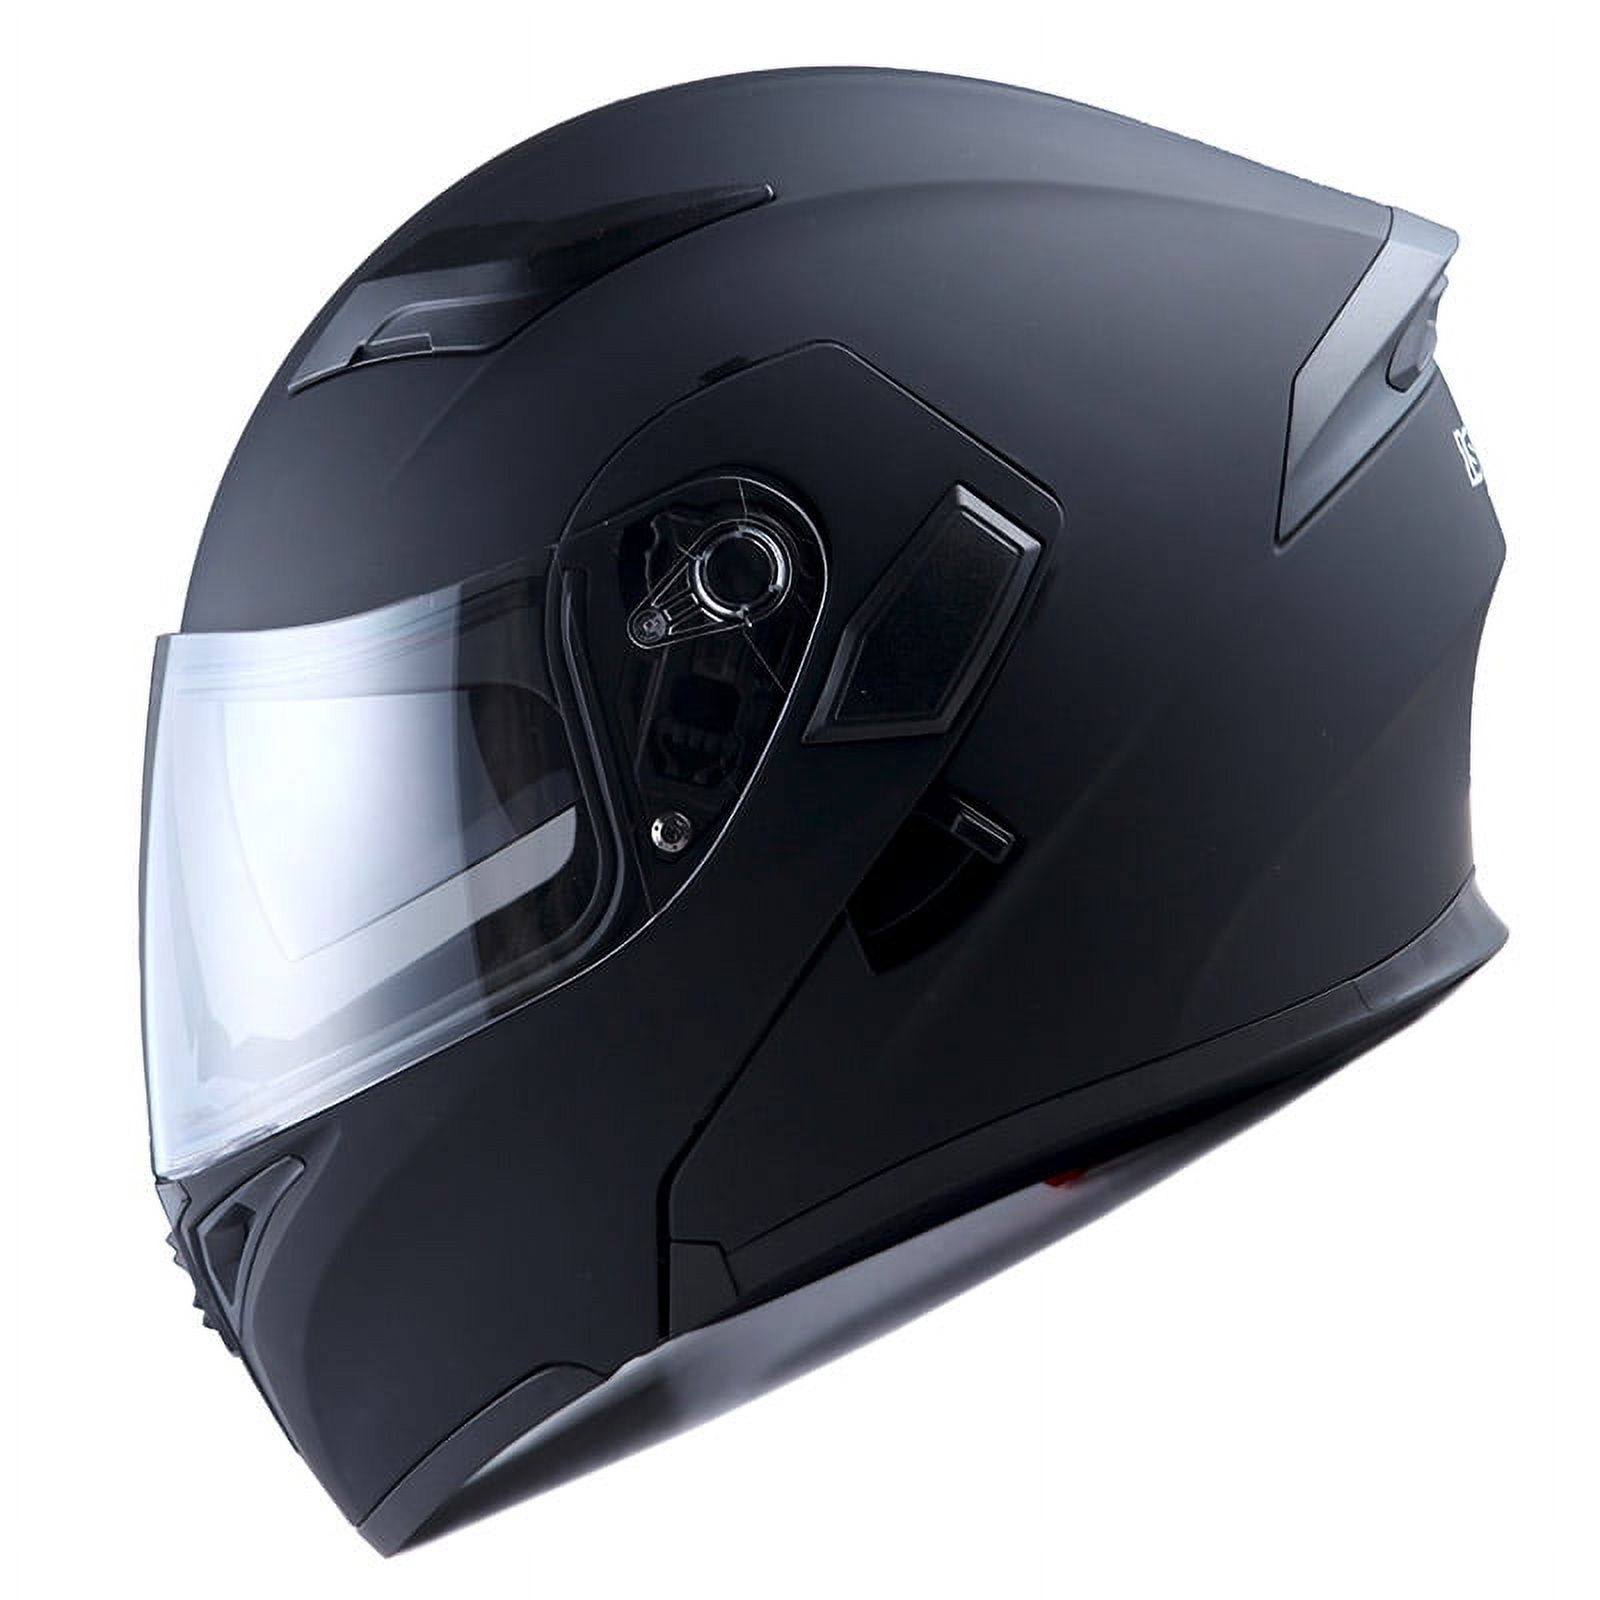 1Storm Motorcycle Modular Full Face Flip up Dual Visor Helmet + Spoiler + Motorcycle Bluetooth Headset: HB89 Matt Black - image 5 of 6